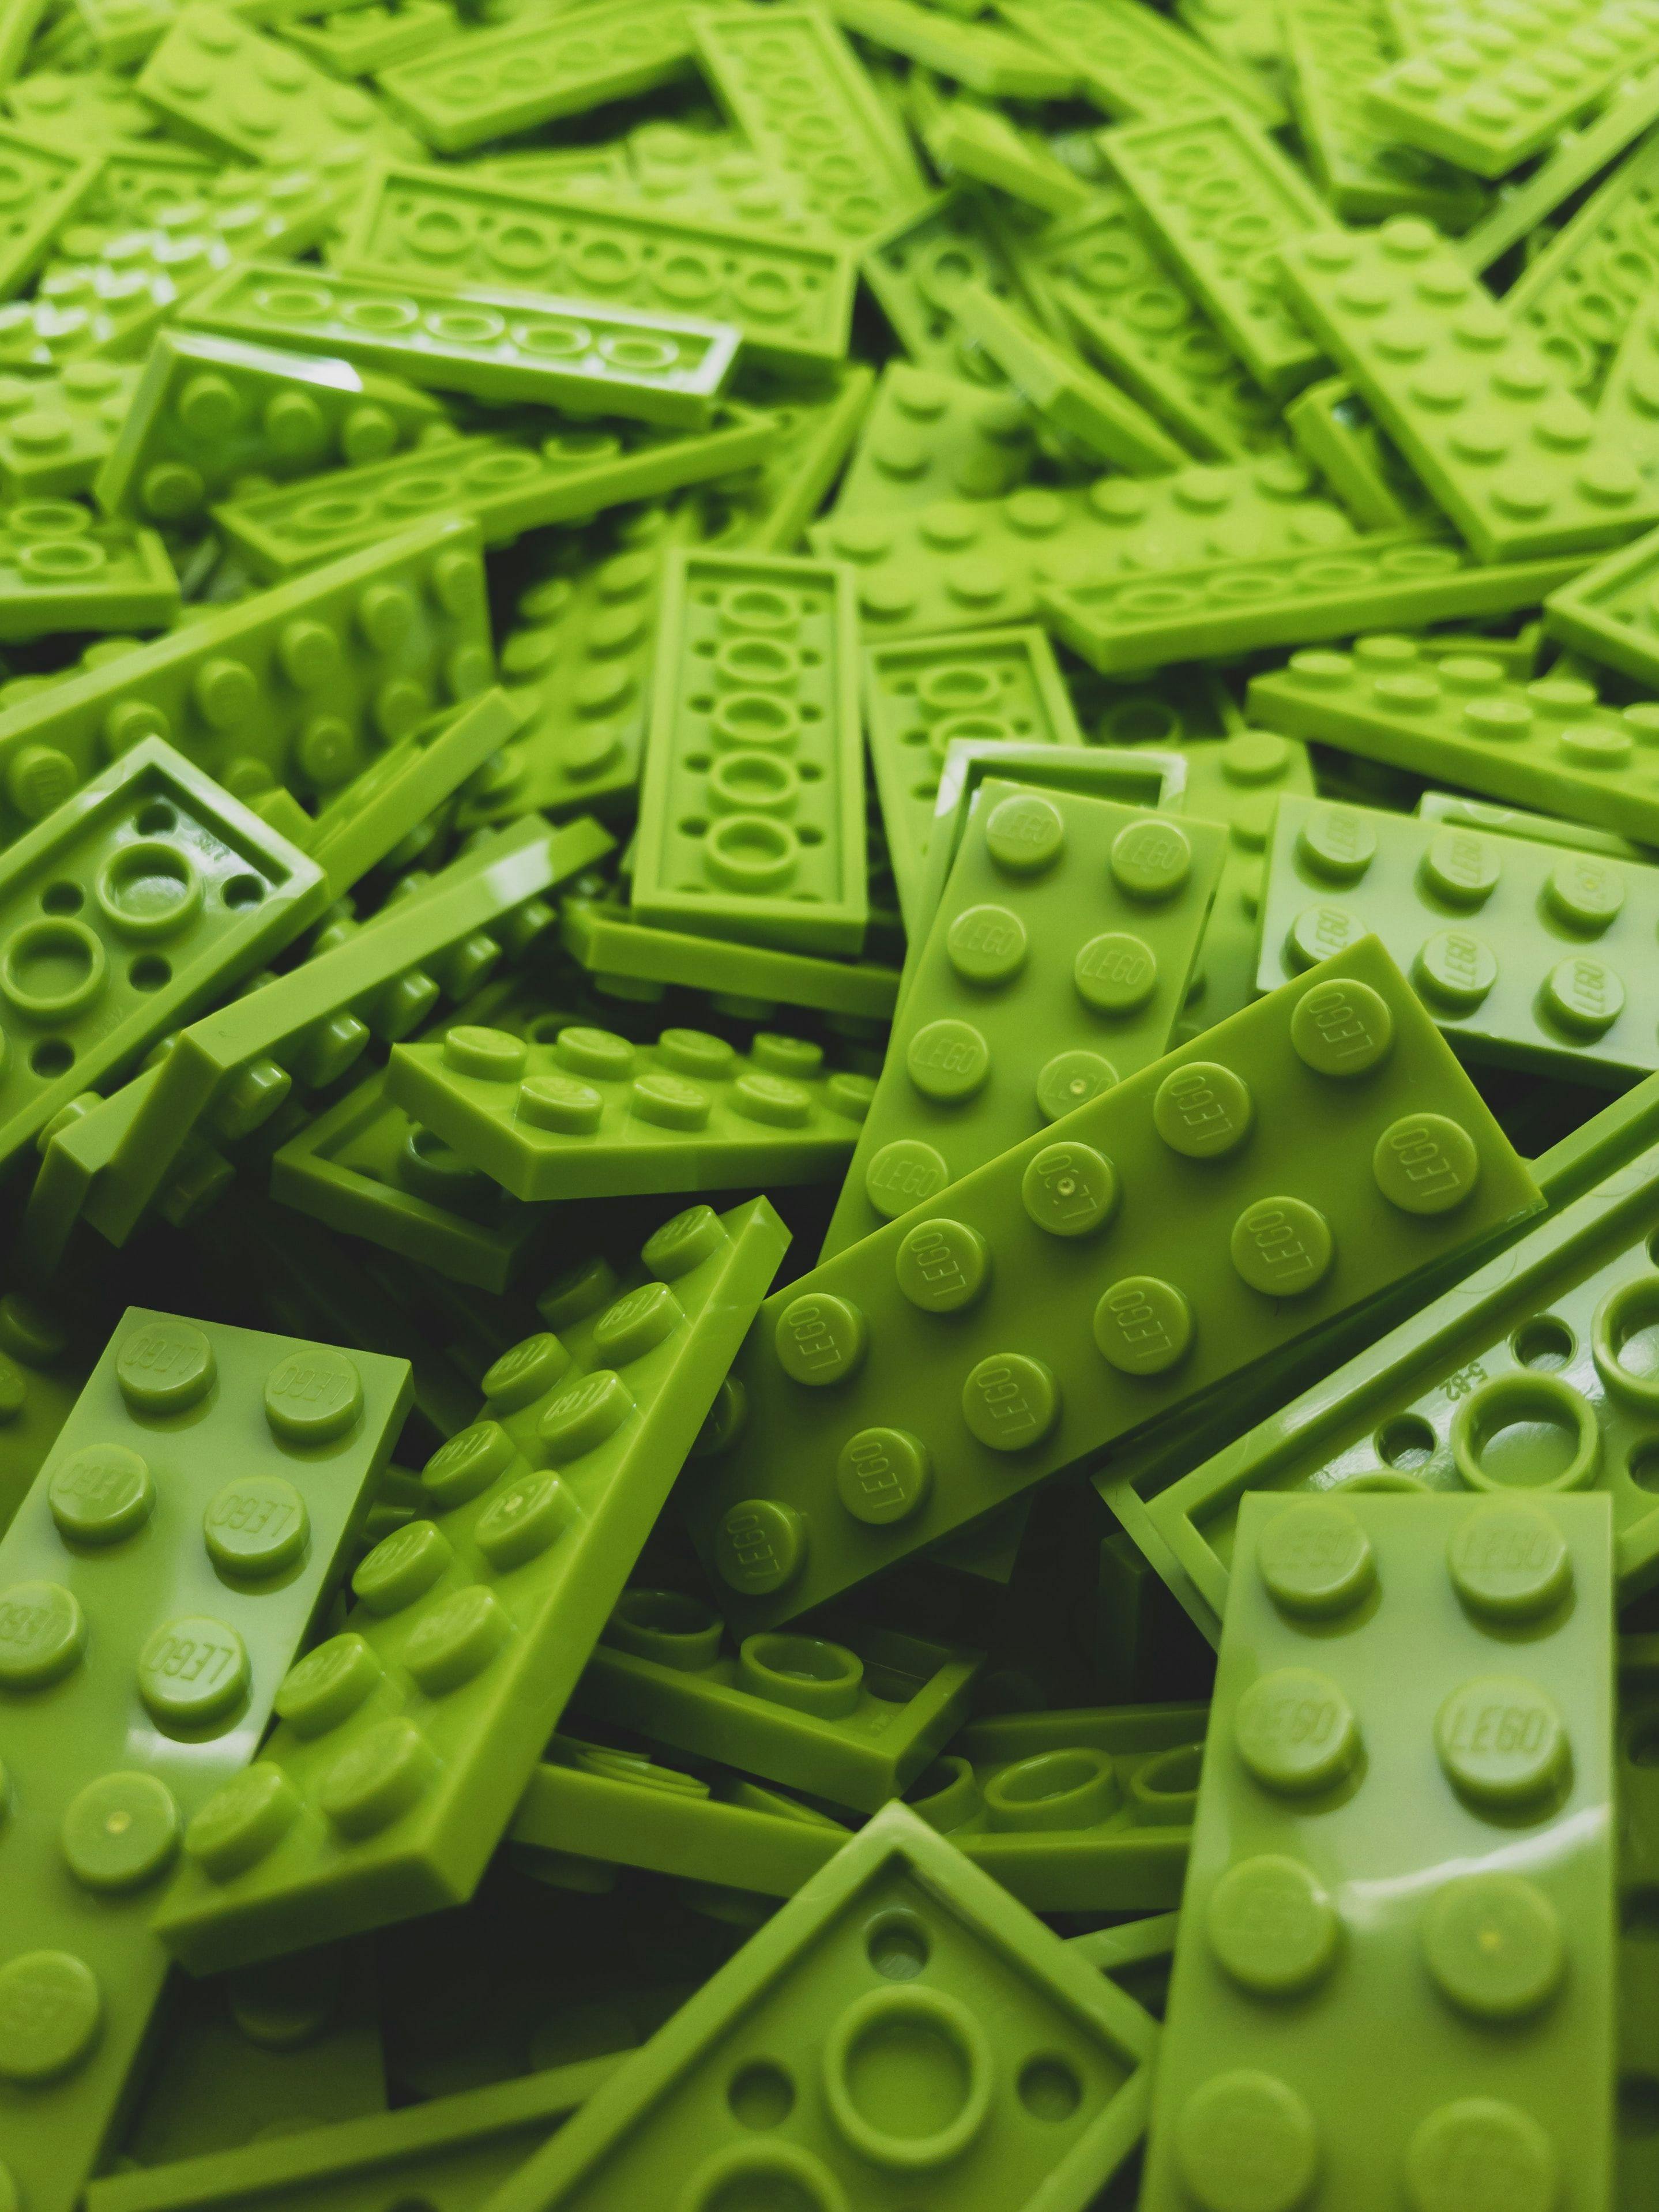 lego green bricks